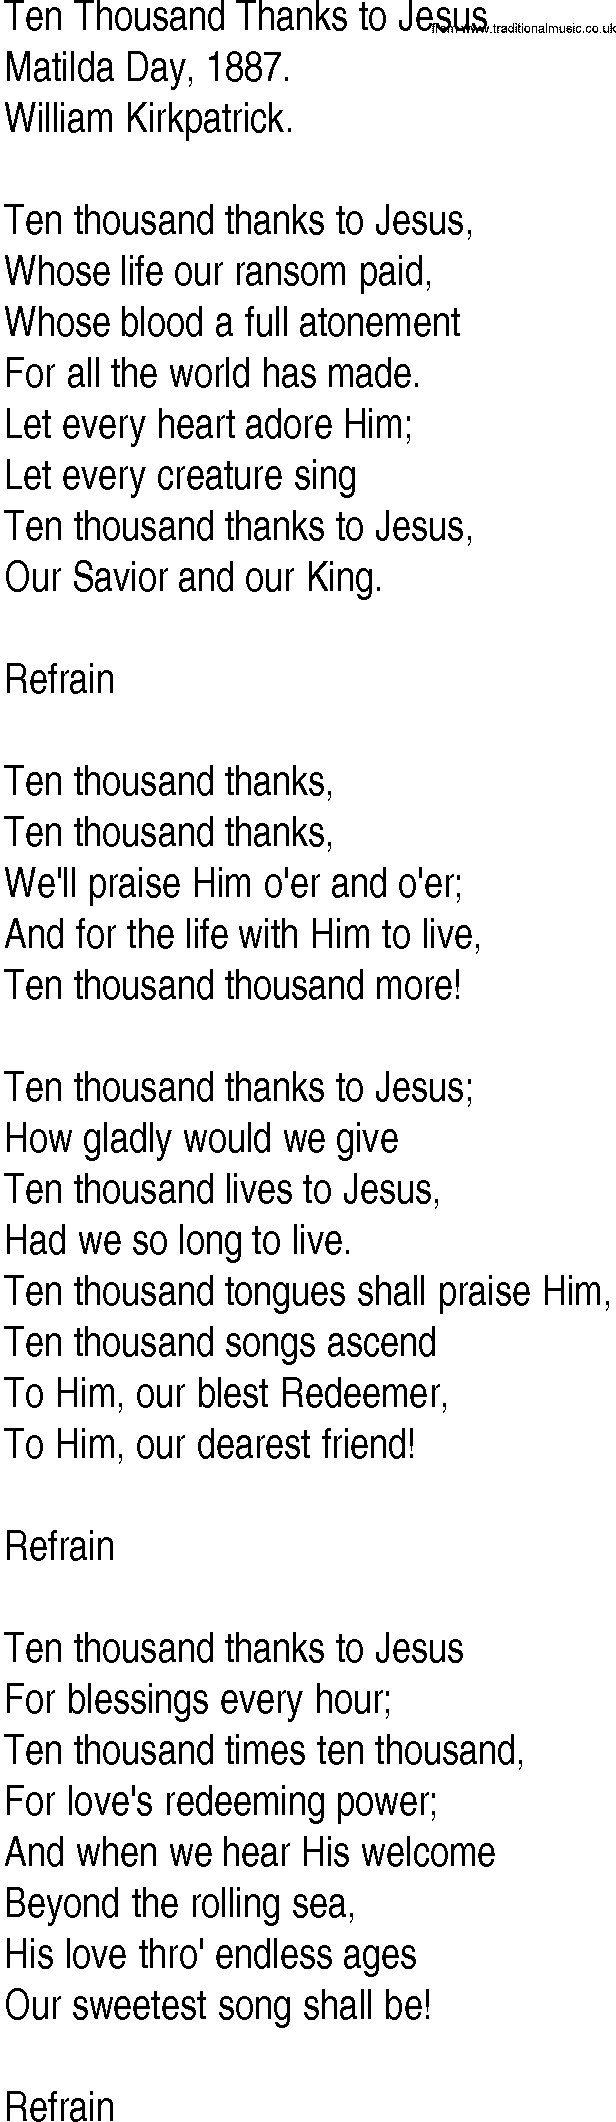 Hymn and Gospel Song: Ten Thousand Thanks to Jesus by Matilda Day lyrics